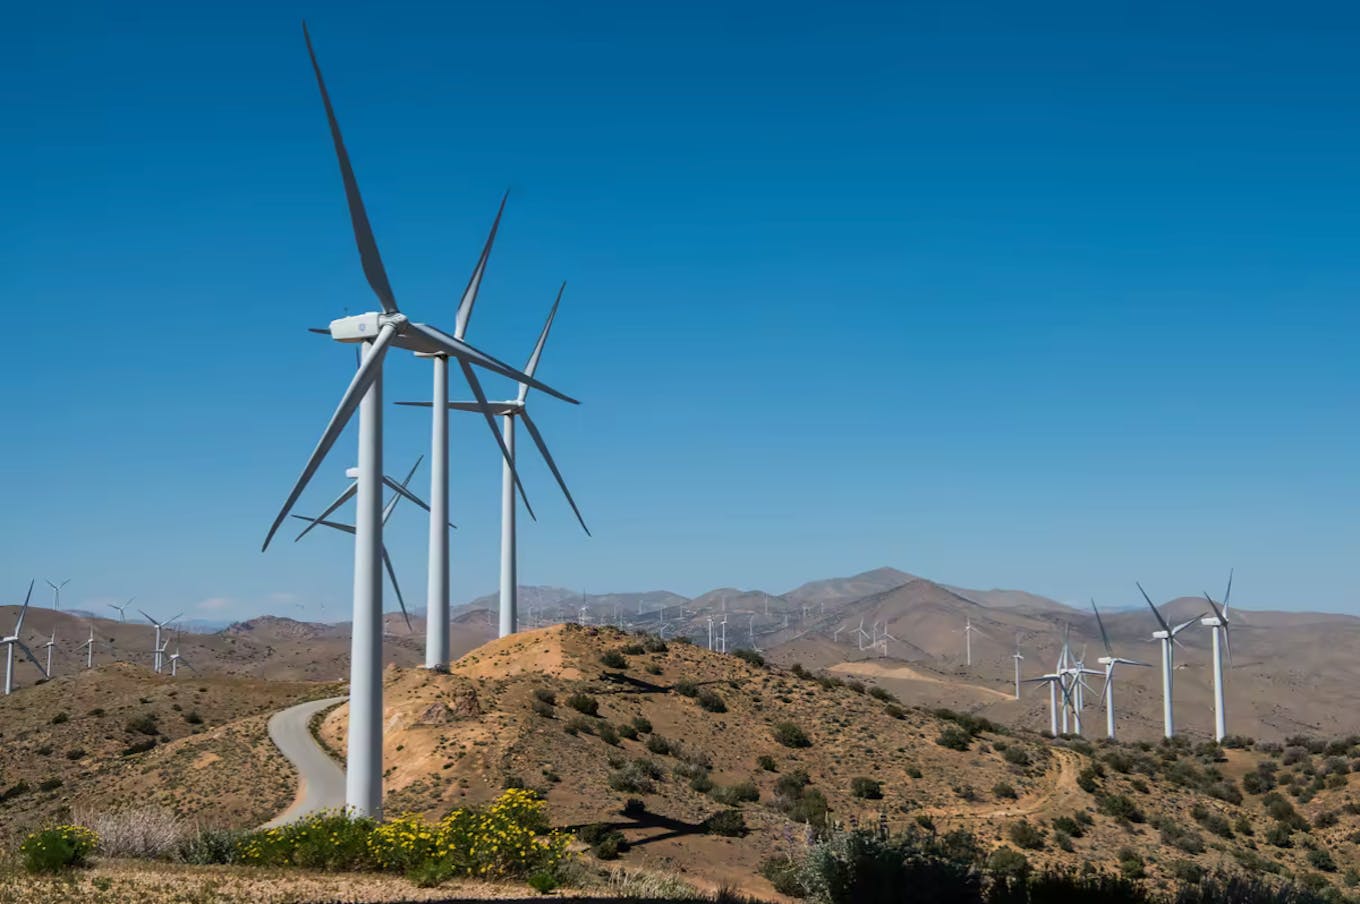 Pine Tree Wind Farm near Tehachapi, California